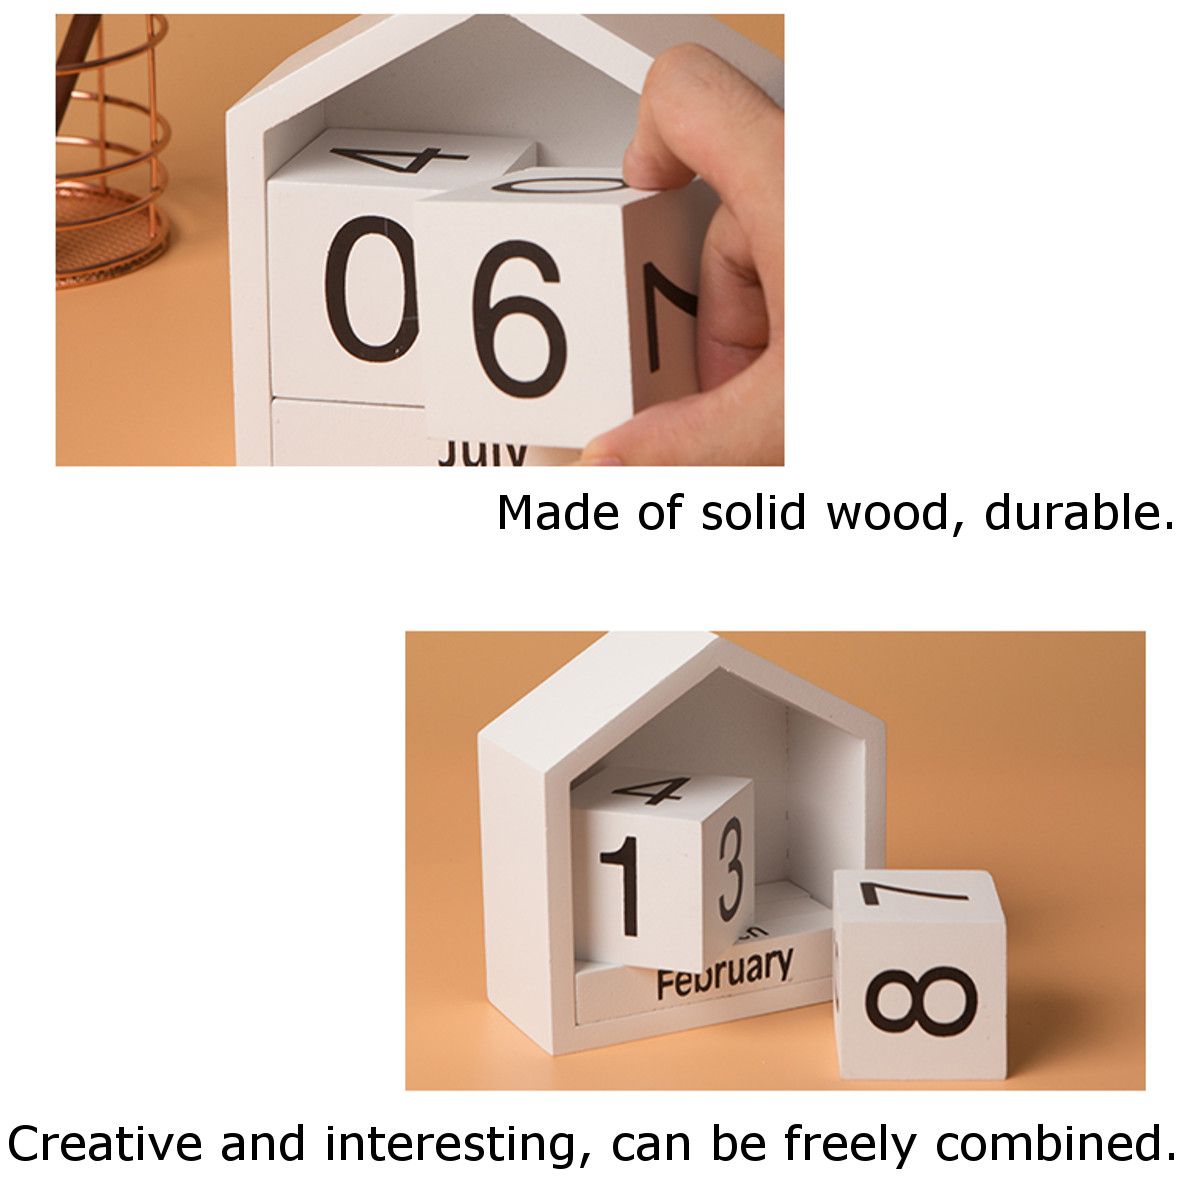 Wooden-Block-Calendar-House-Decoration-Creative-Desktop-Ornaments-1445386